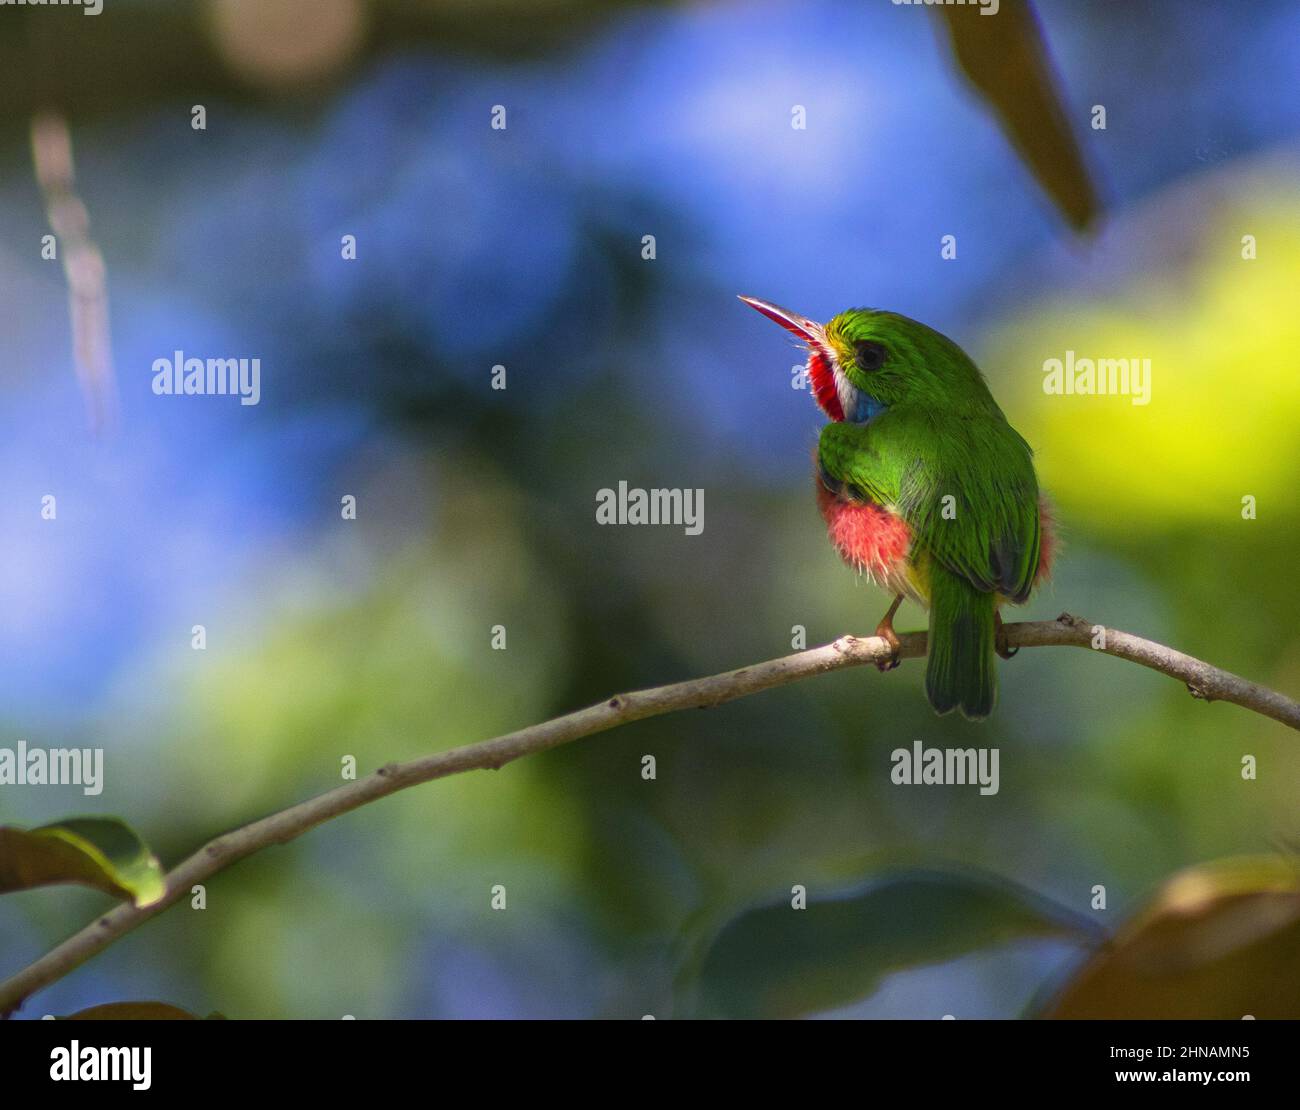 Closeup shot of a cuban tody bird perched on a branch Stock Photo